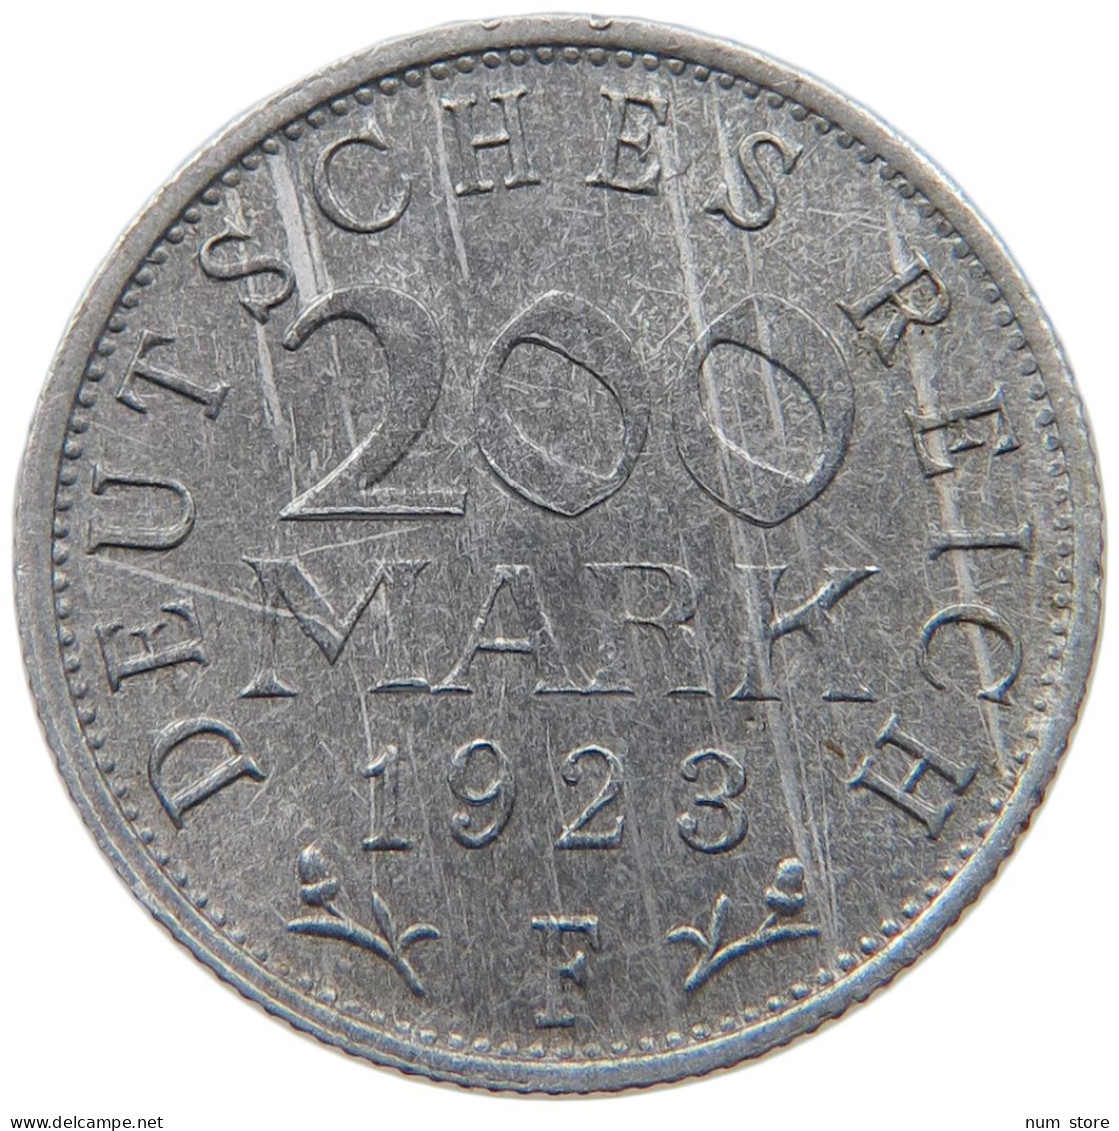 WEIMARER REPUBLIK 200 MARK 1923 F  #MA 098780 - 200 & 500 Mark